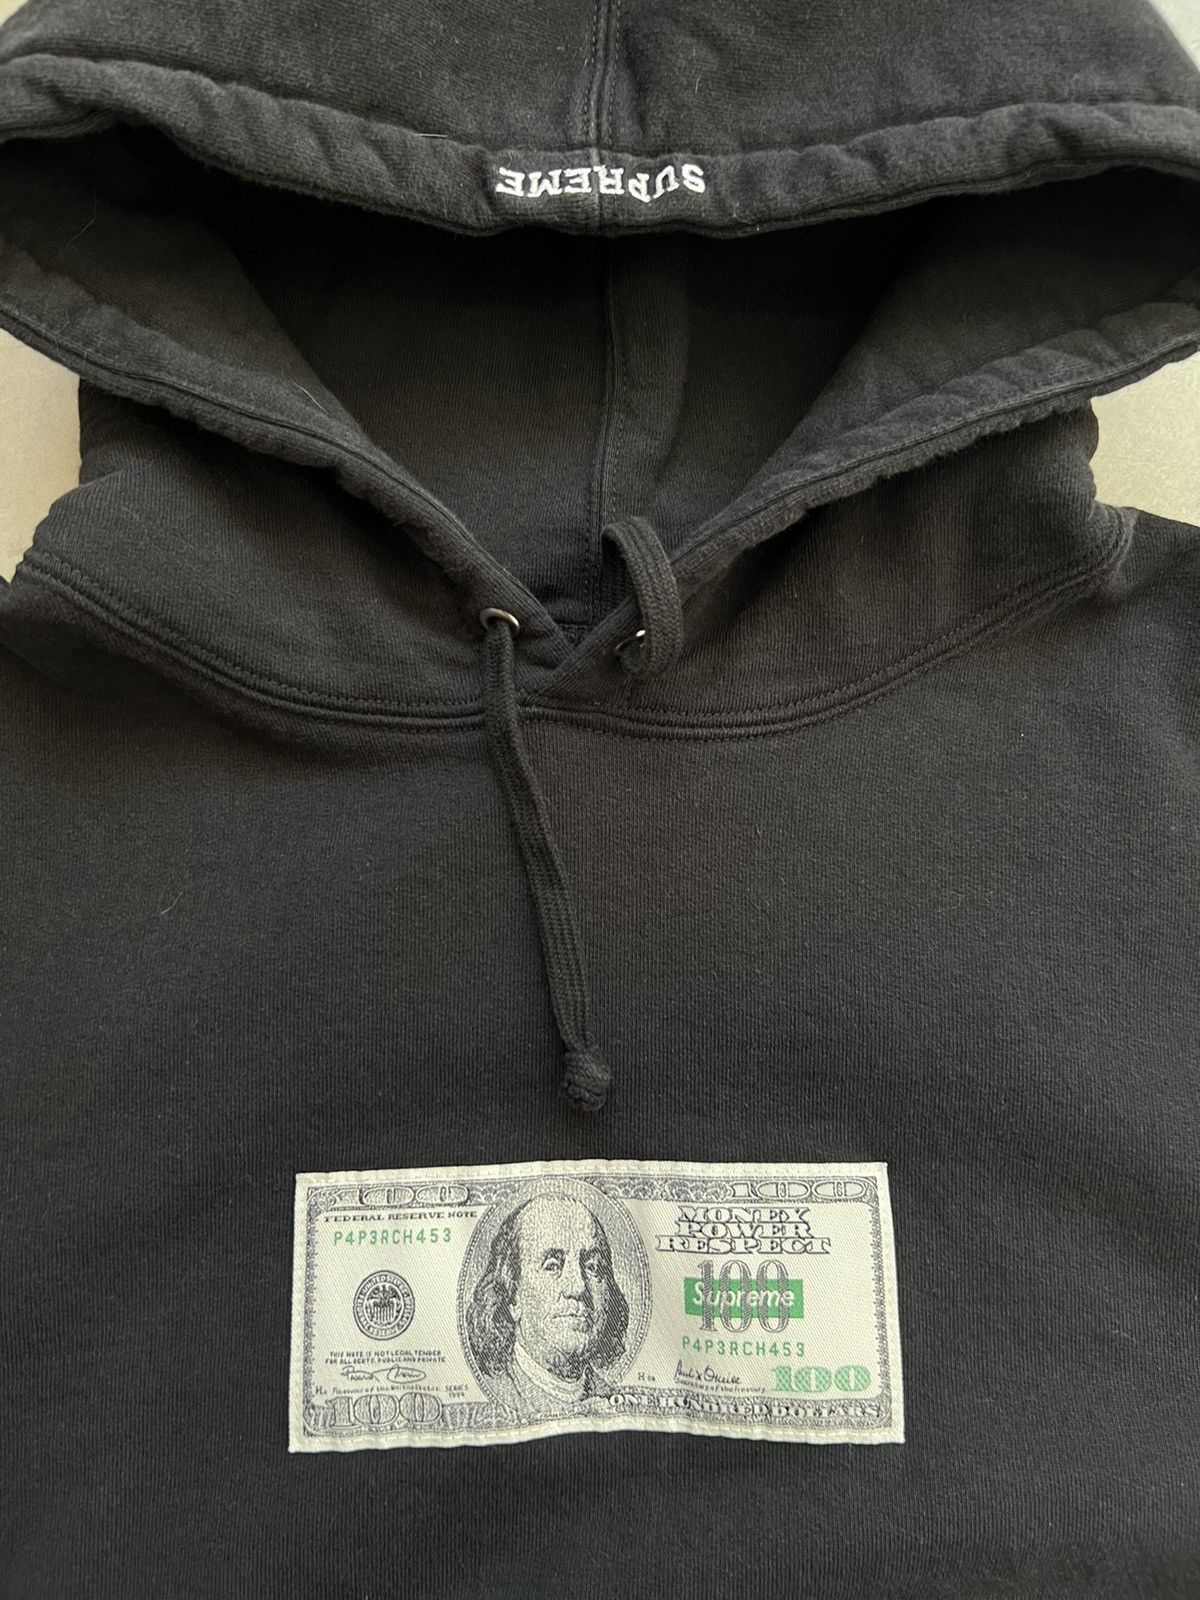 Supreme Supreme $100 Bill Black Hoodie Size Large | Grailed